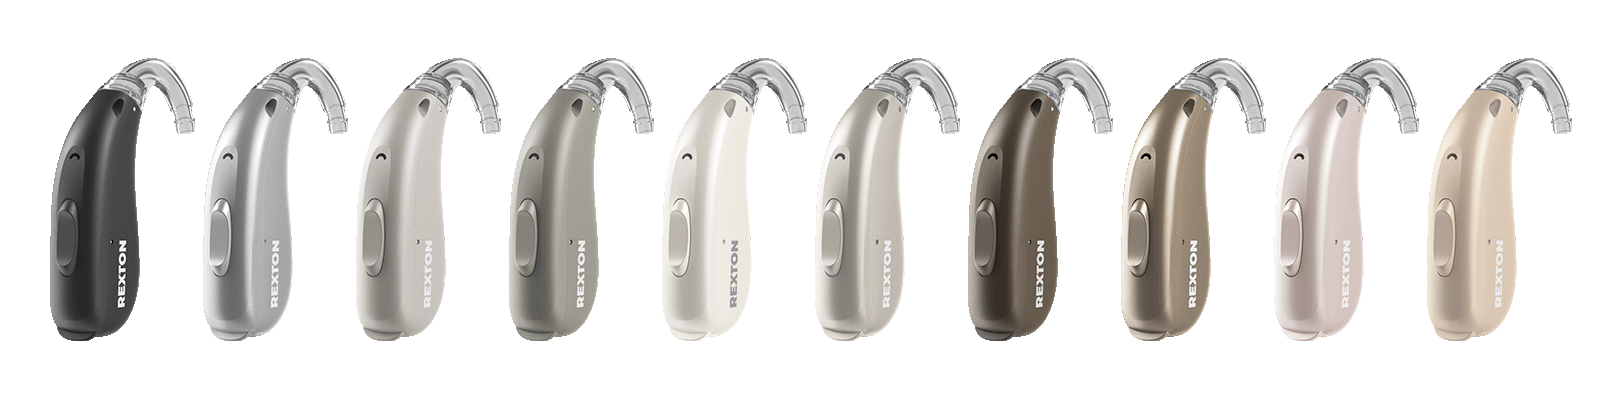 Rexton BiCore BTE hearing aids color range